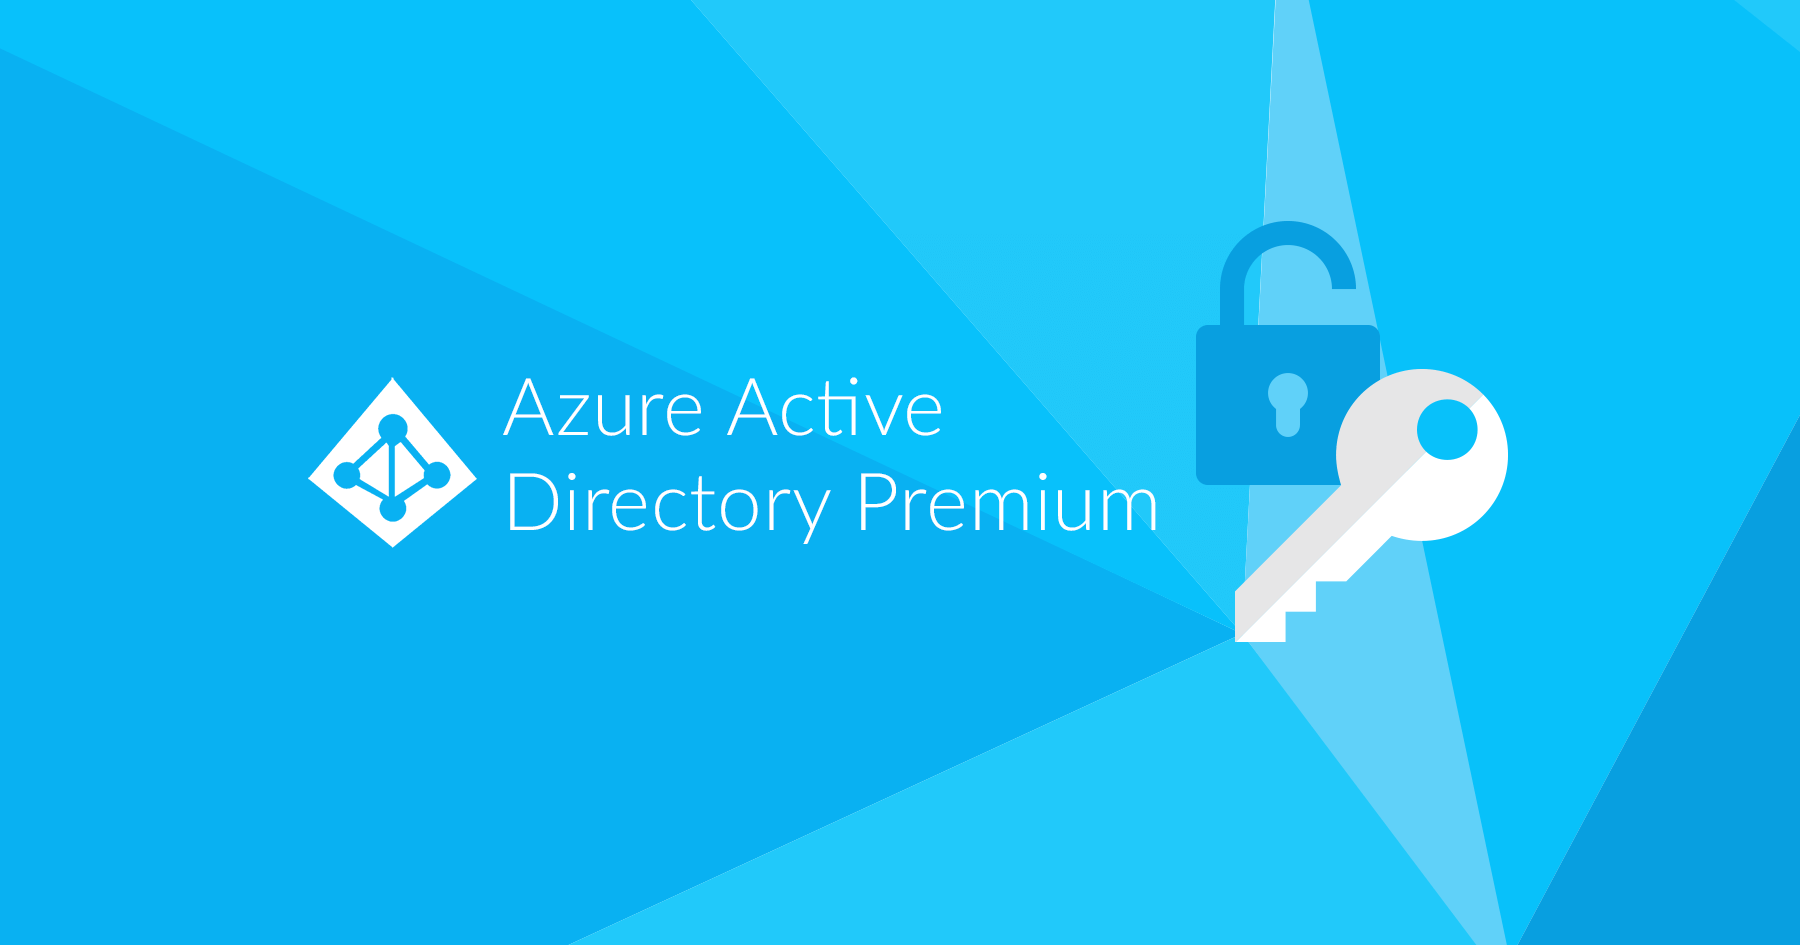 Azure Active Directory Logo - Self Serve Password Reset With Azure Active Directory Premium